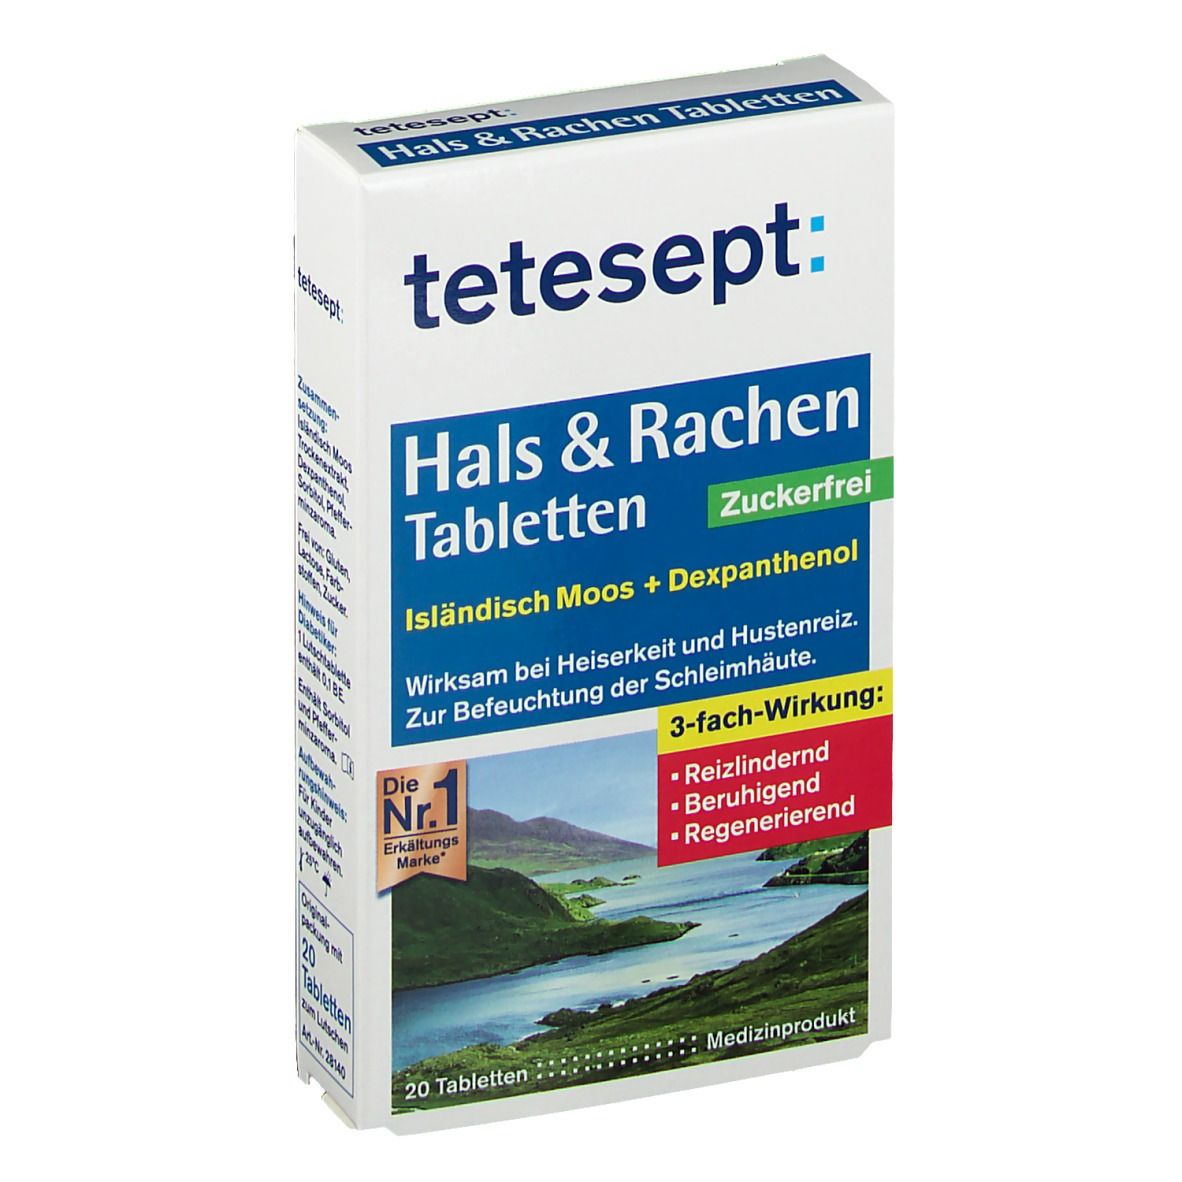 tetesept® Hals & Rachen Tabletten Zuckerfrei